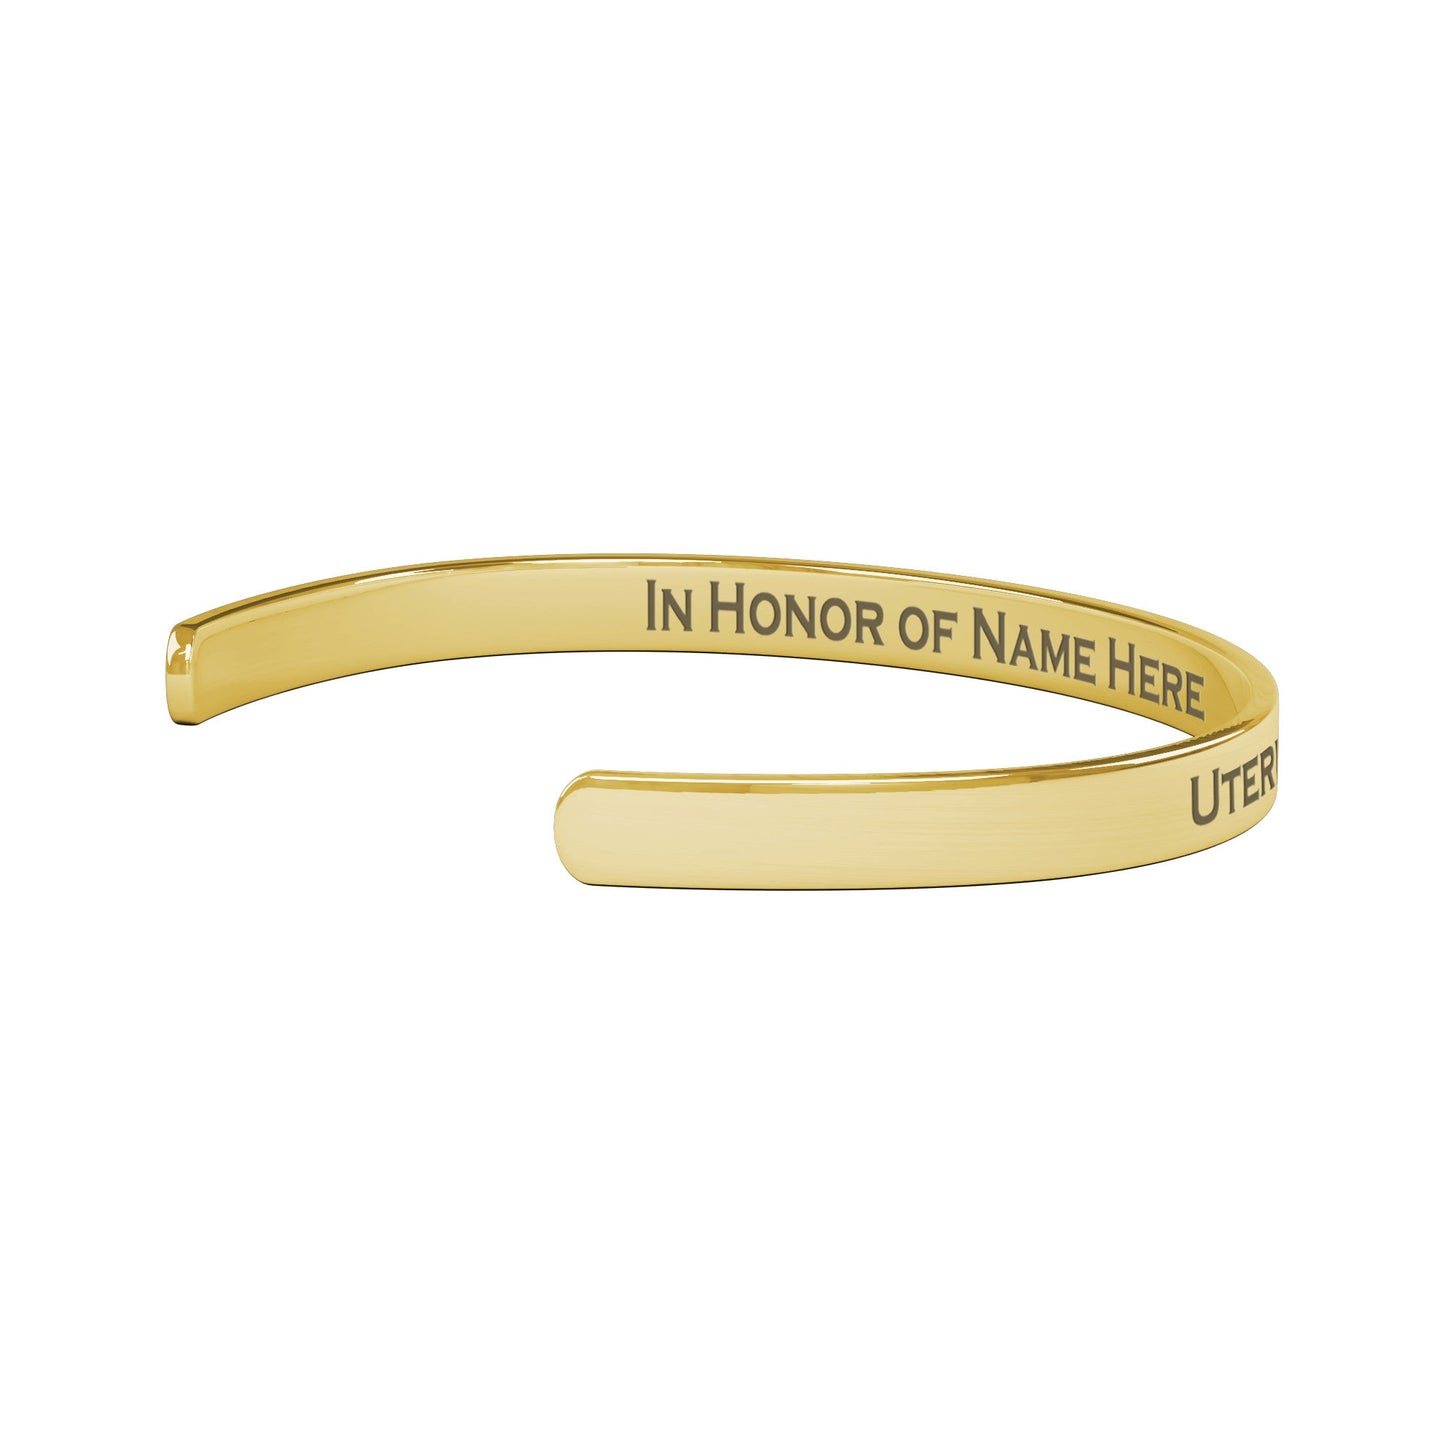 Personalized Uterine Cancer Awareness Cuff Bracelet |x|